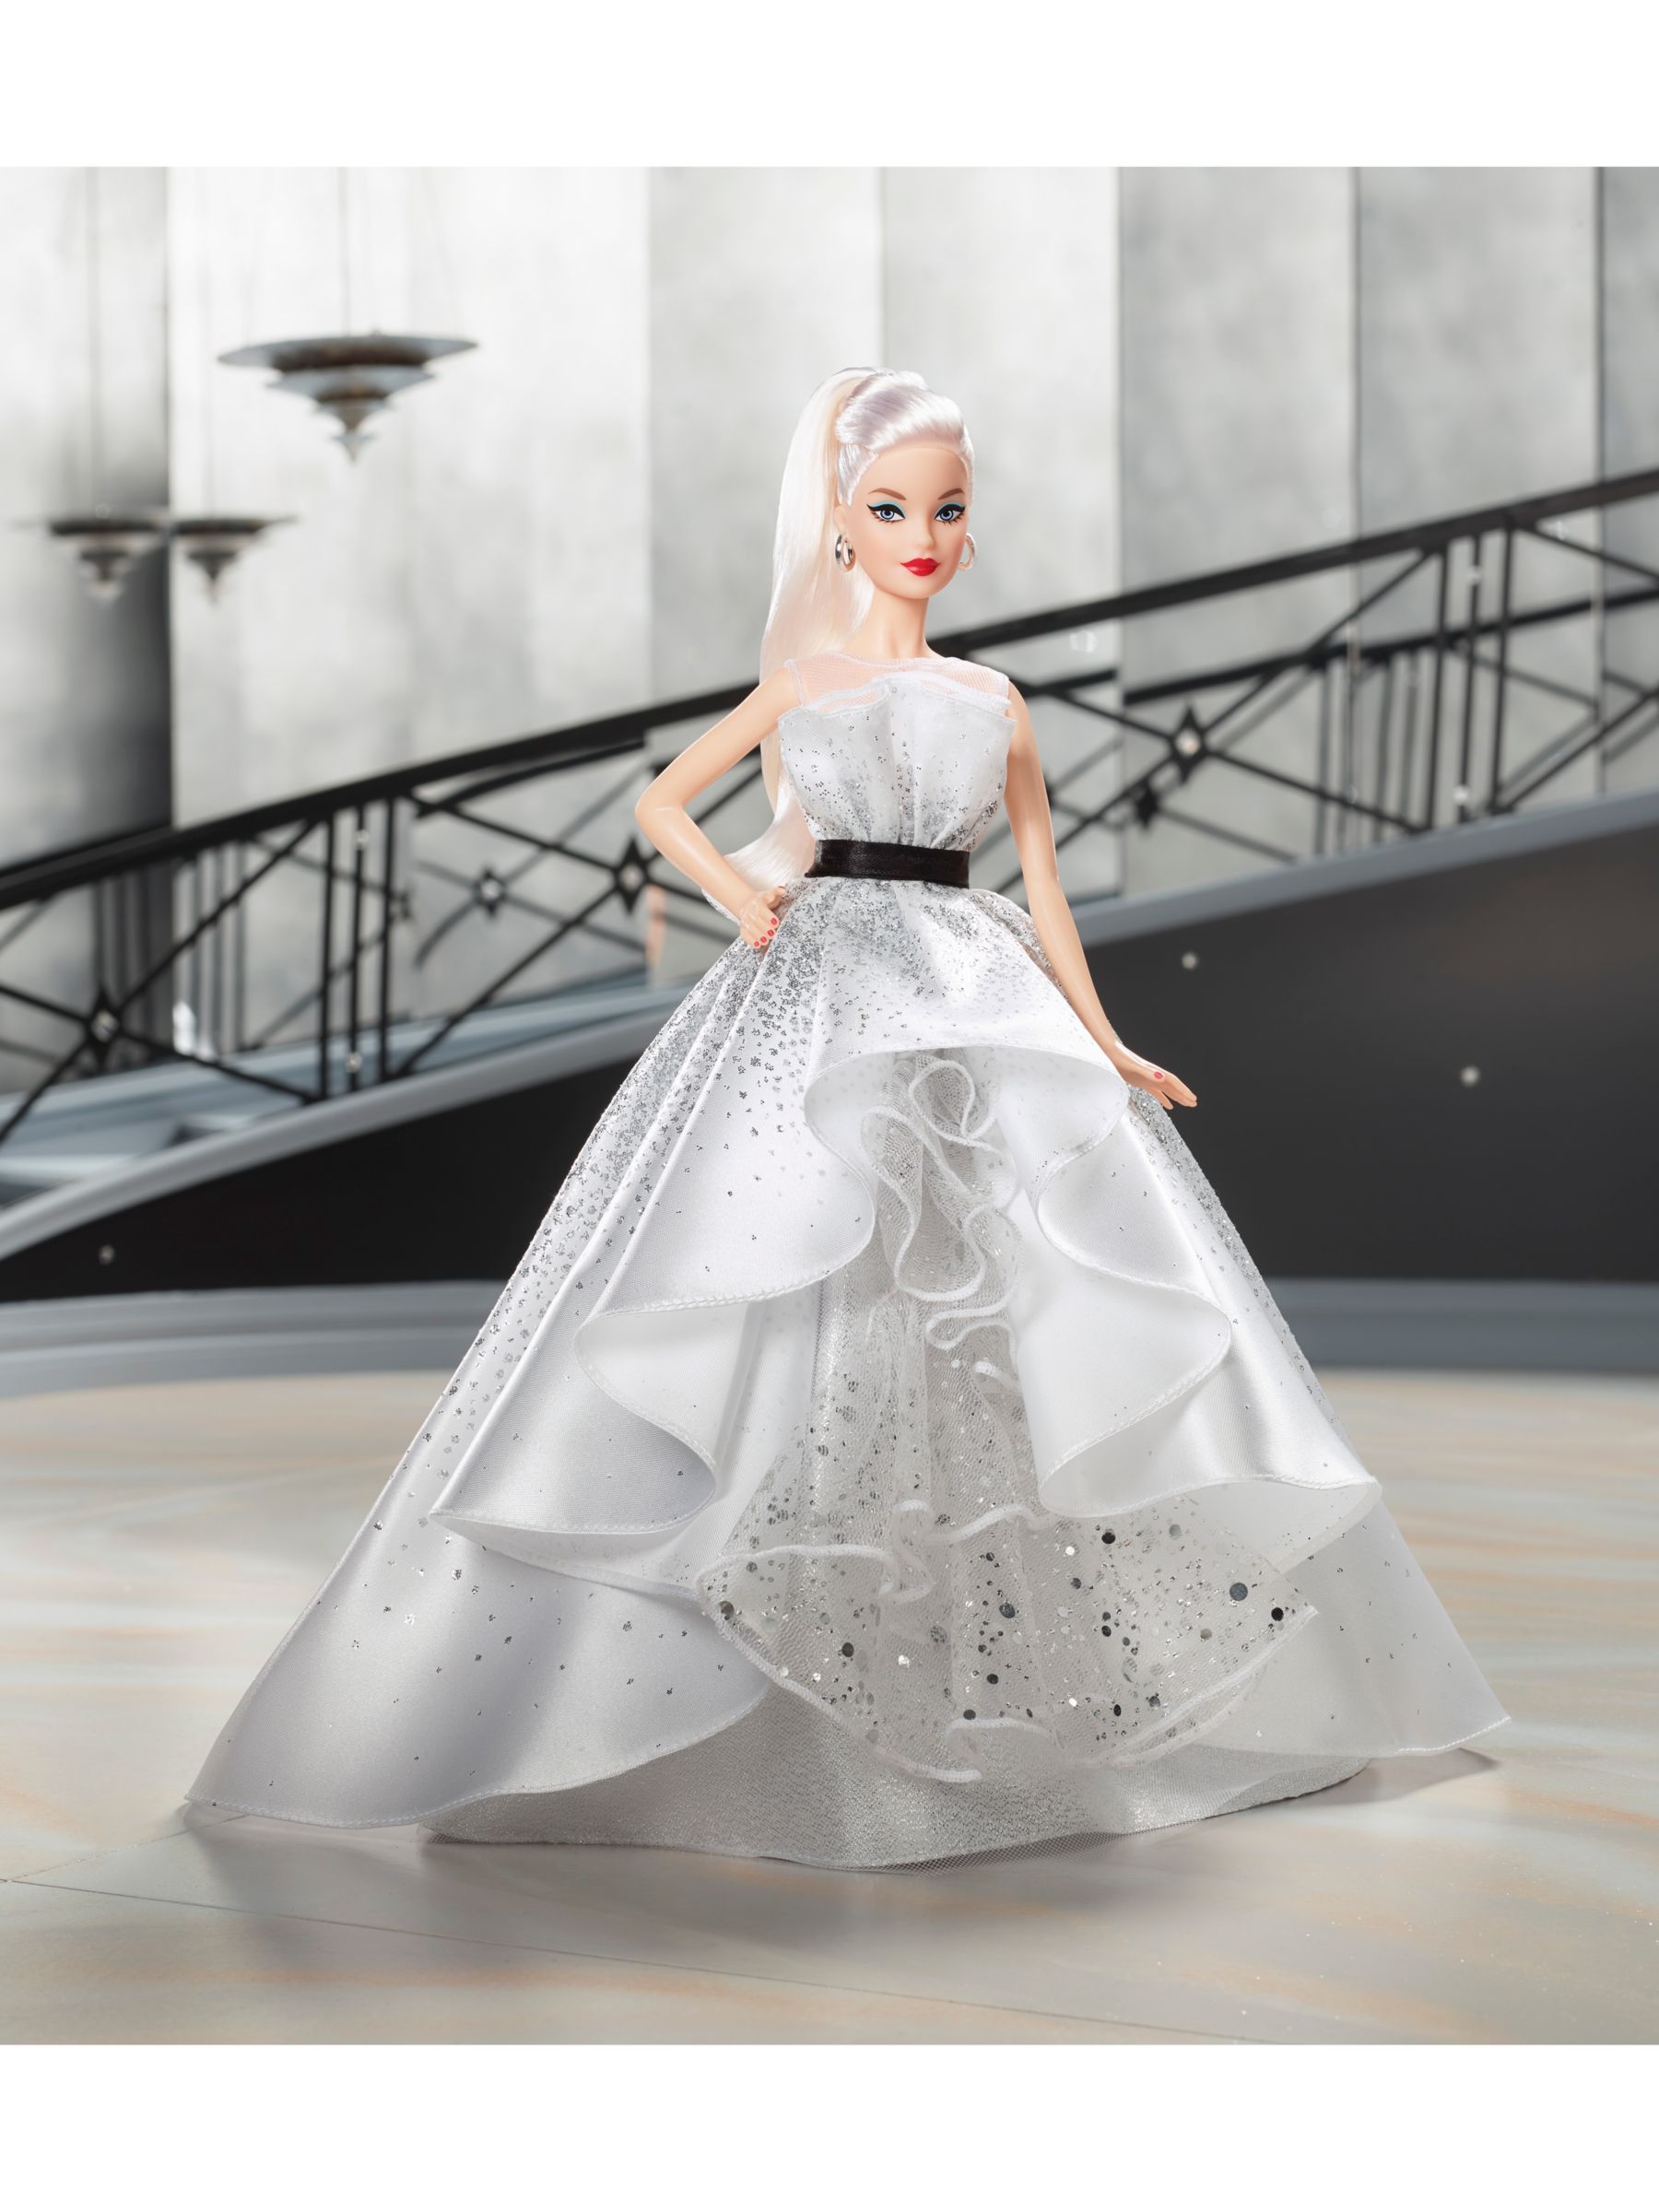 Barbie 60th anniversary doll juniper ex2200